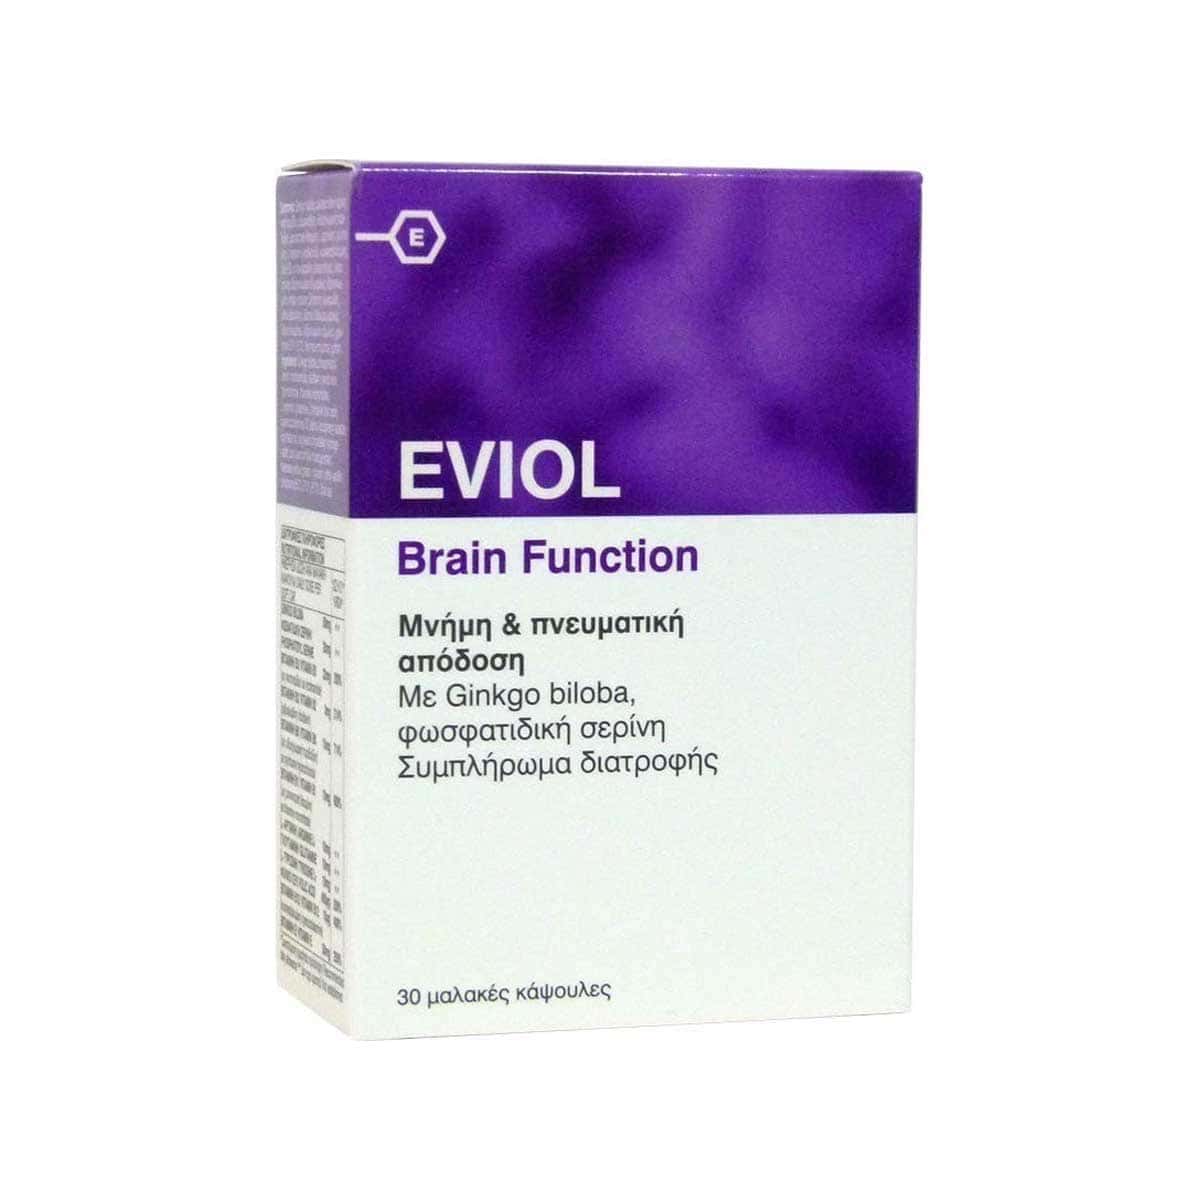 Eviol-Brain-Function-30-malakes-kapsoules-5213004240043